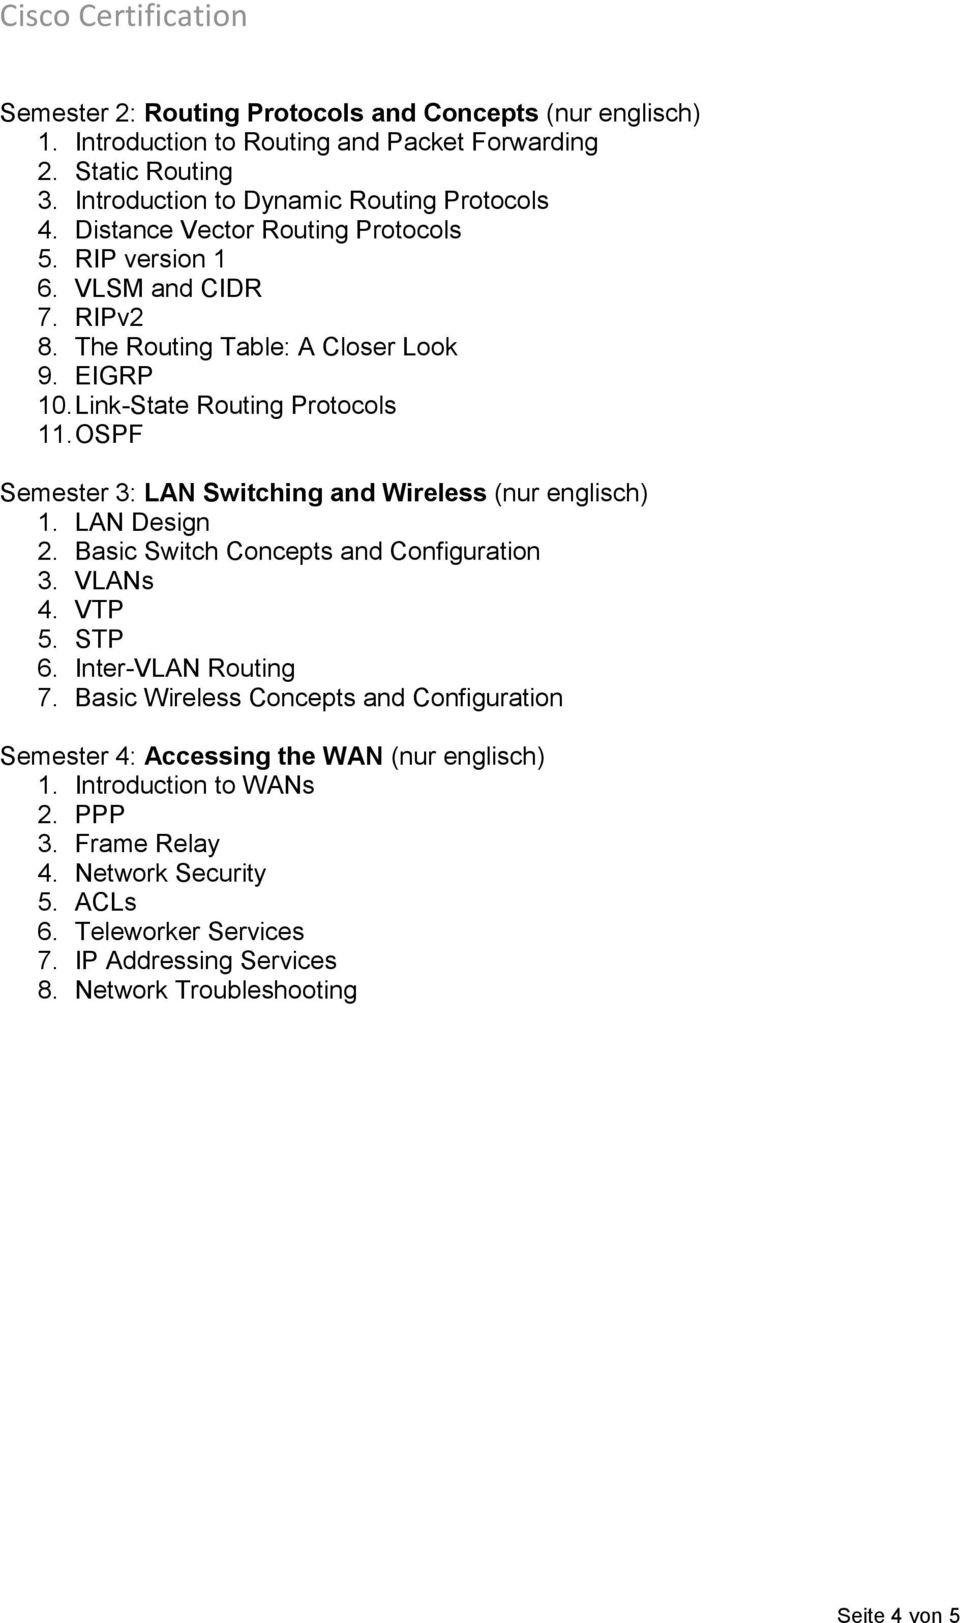 OSPF Semester 3: LAN Switching and Wireless (nur englisch) 1. LAN Design 2. Basic Switch Concepts and Configuration 3. VLANs 4. VTP 5. STP 6. Inter-VLAN Routing 7.